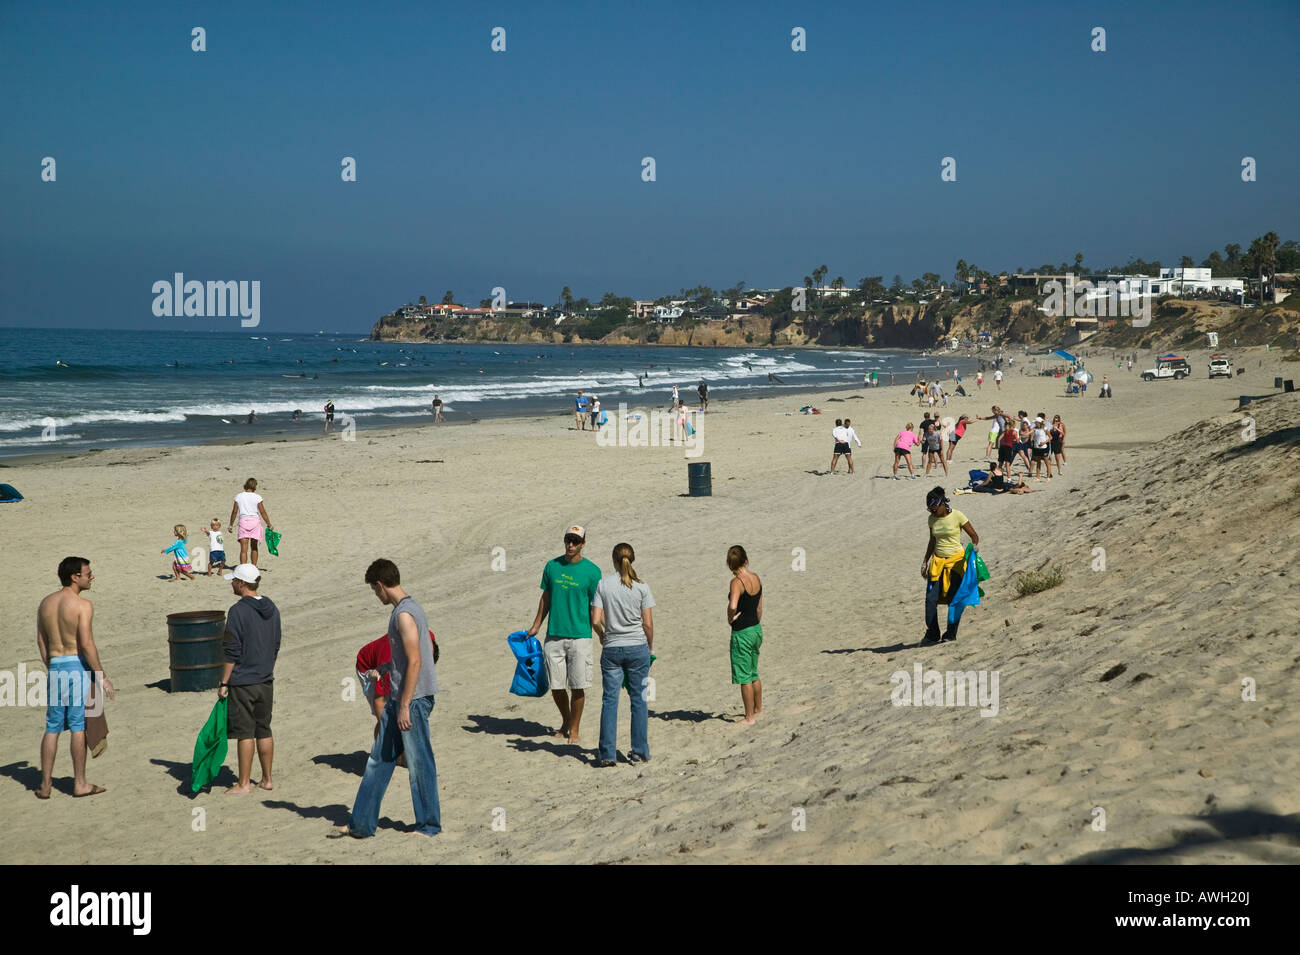 People on beach cleanup day Pacific Beach Tourmaline Surfing Beach Park, San Diego, California, USA Stock Photo